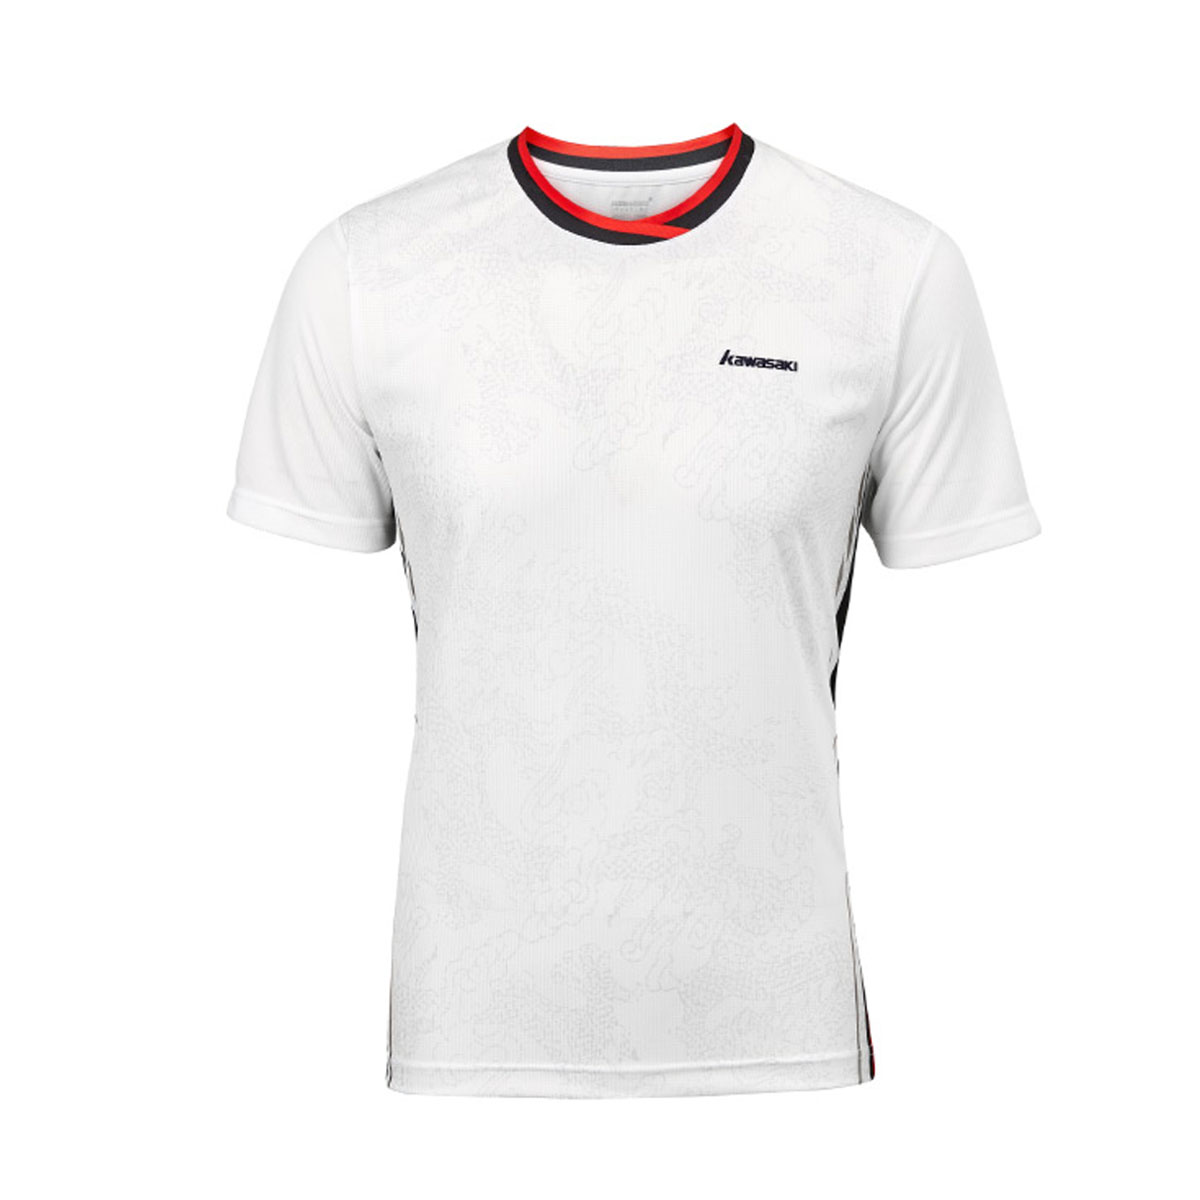 Мужская футболка KAWASAKI A1949-1 WHITE (размеры: M, L, 2XL, 3XL, 4XL). 